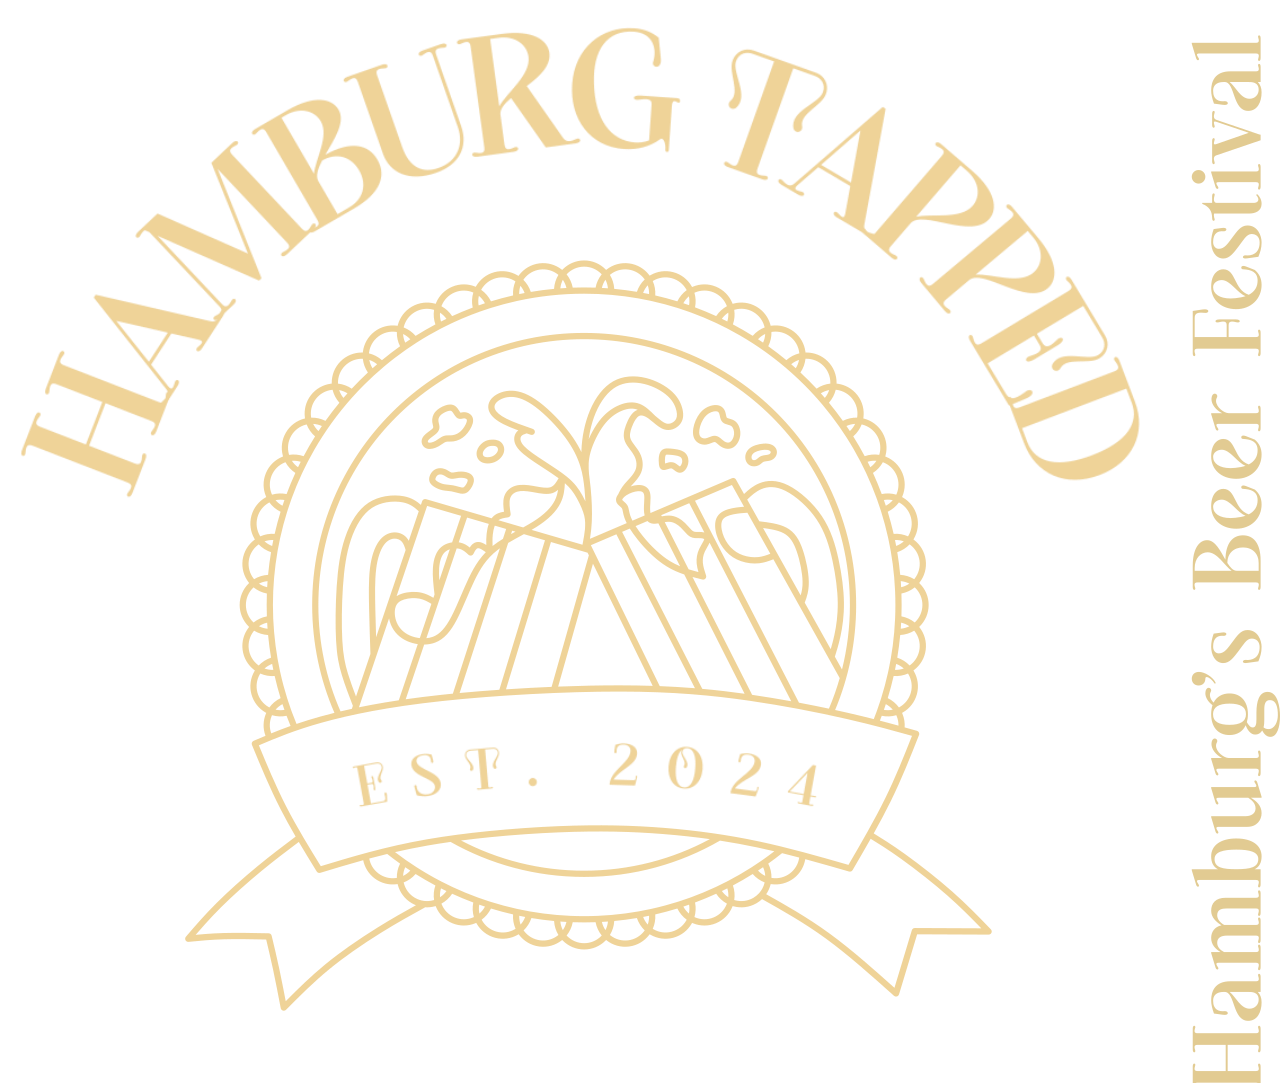 HAMBURG TAPPED's logo